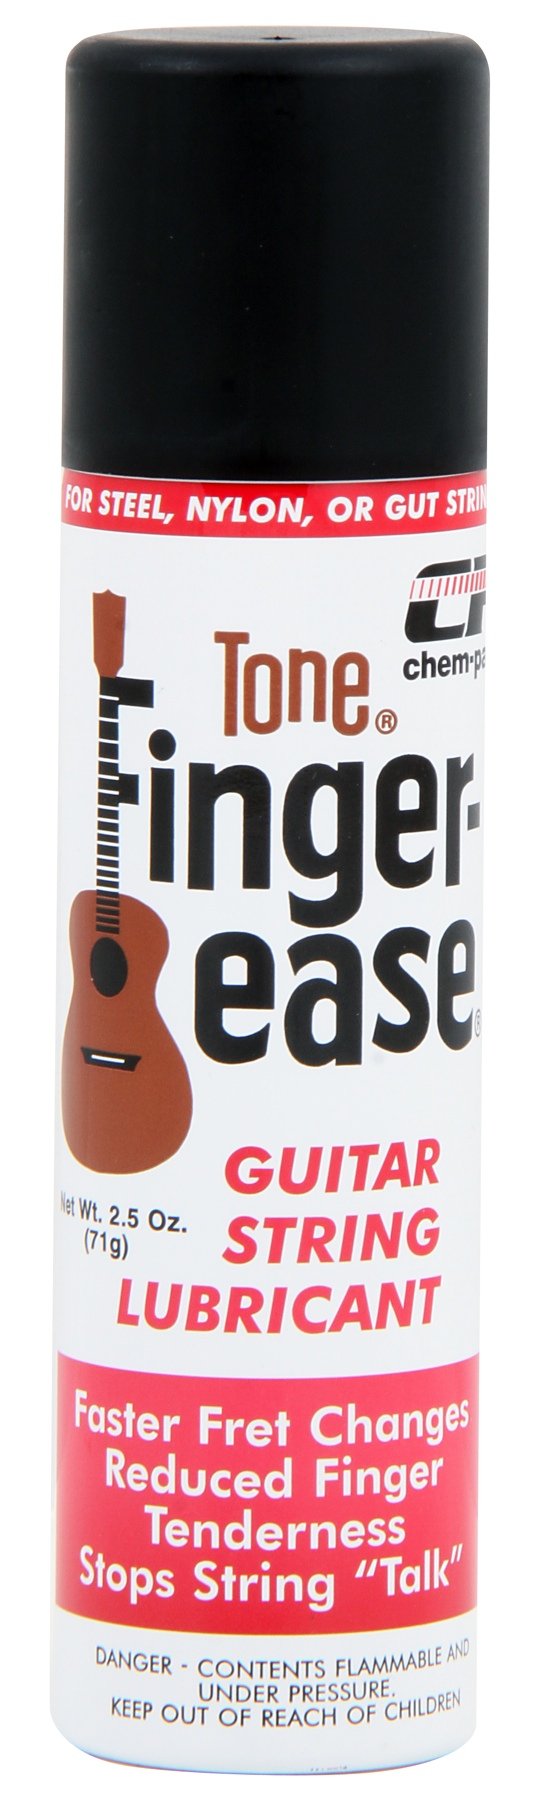 Chem Pak Finger Ease Guitar String Lubricant